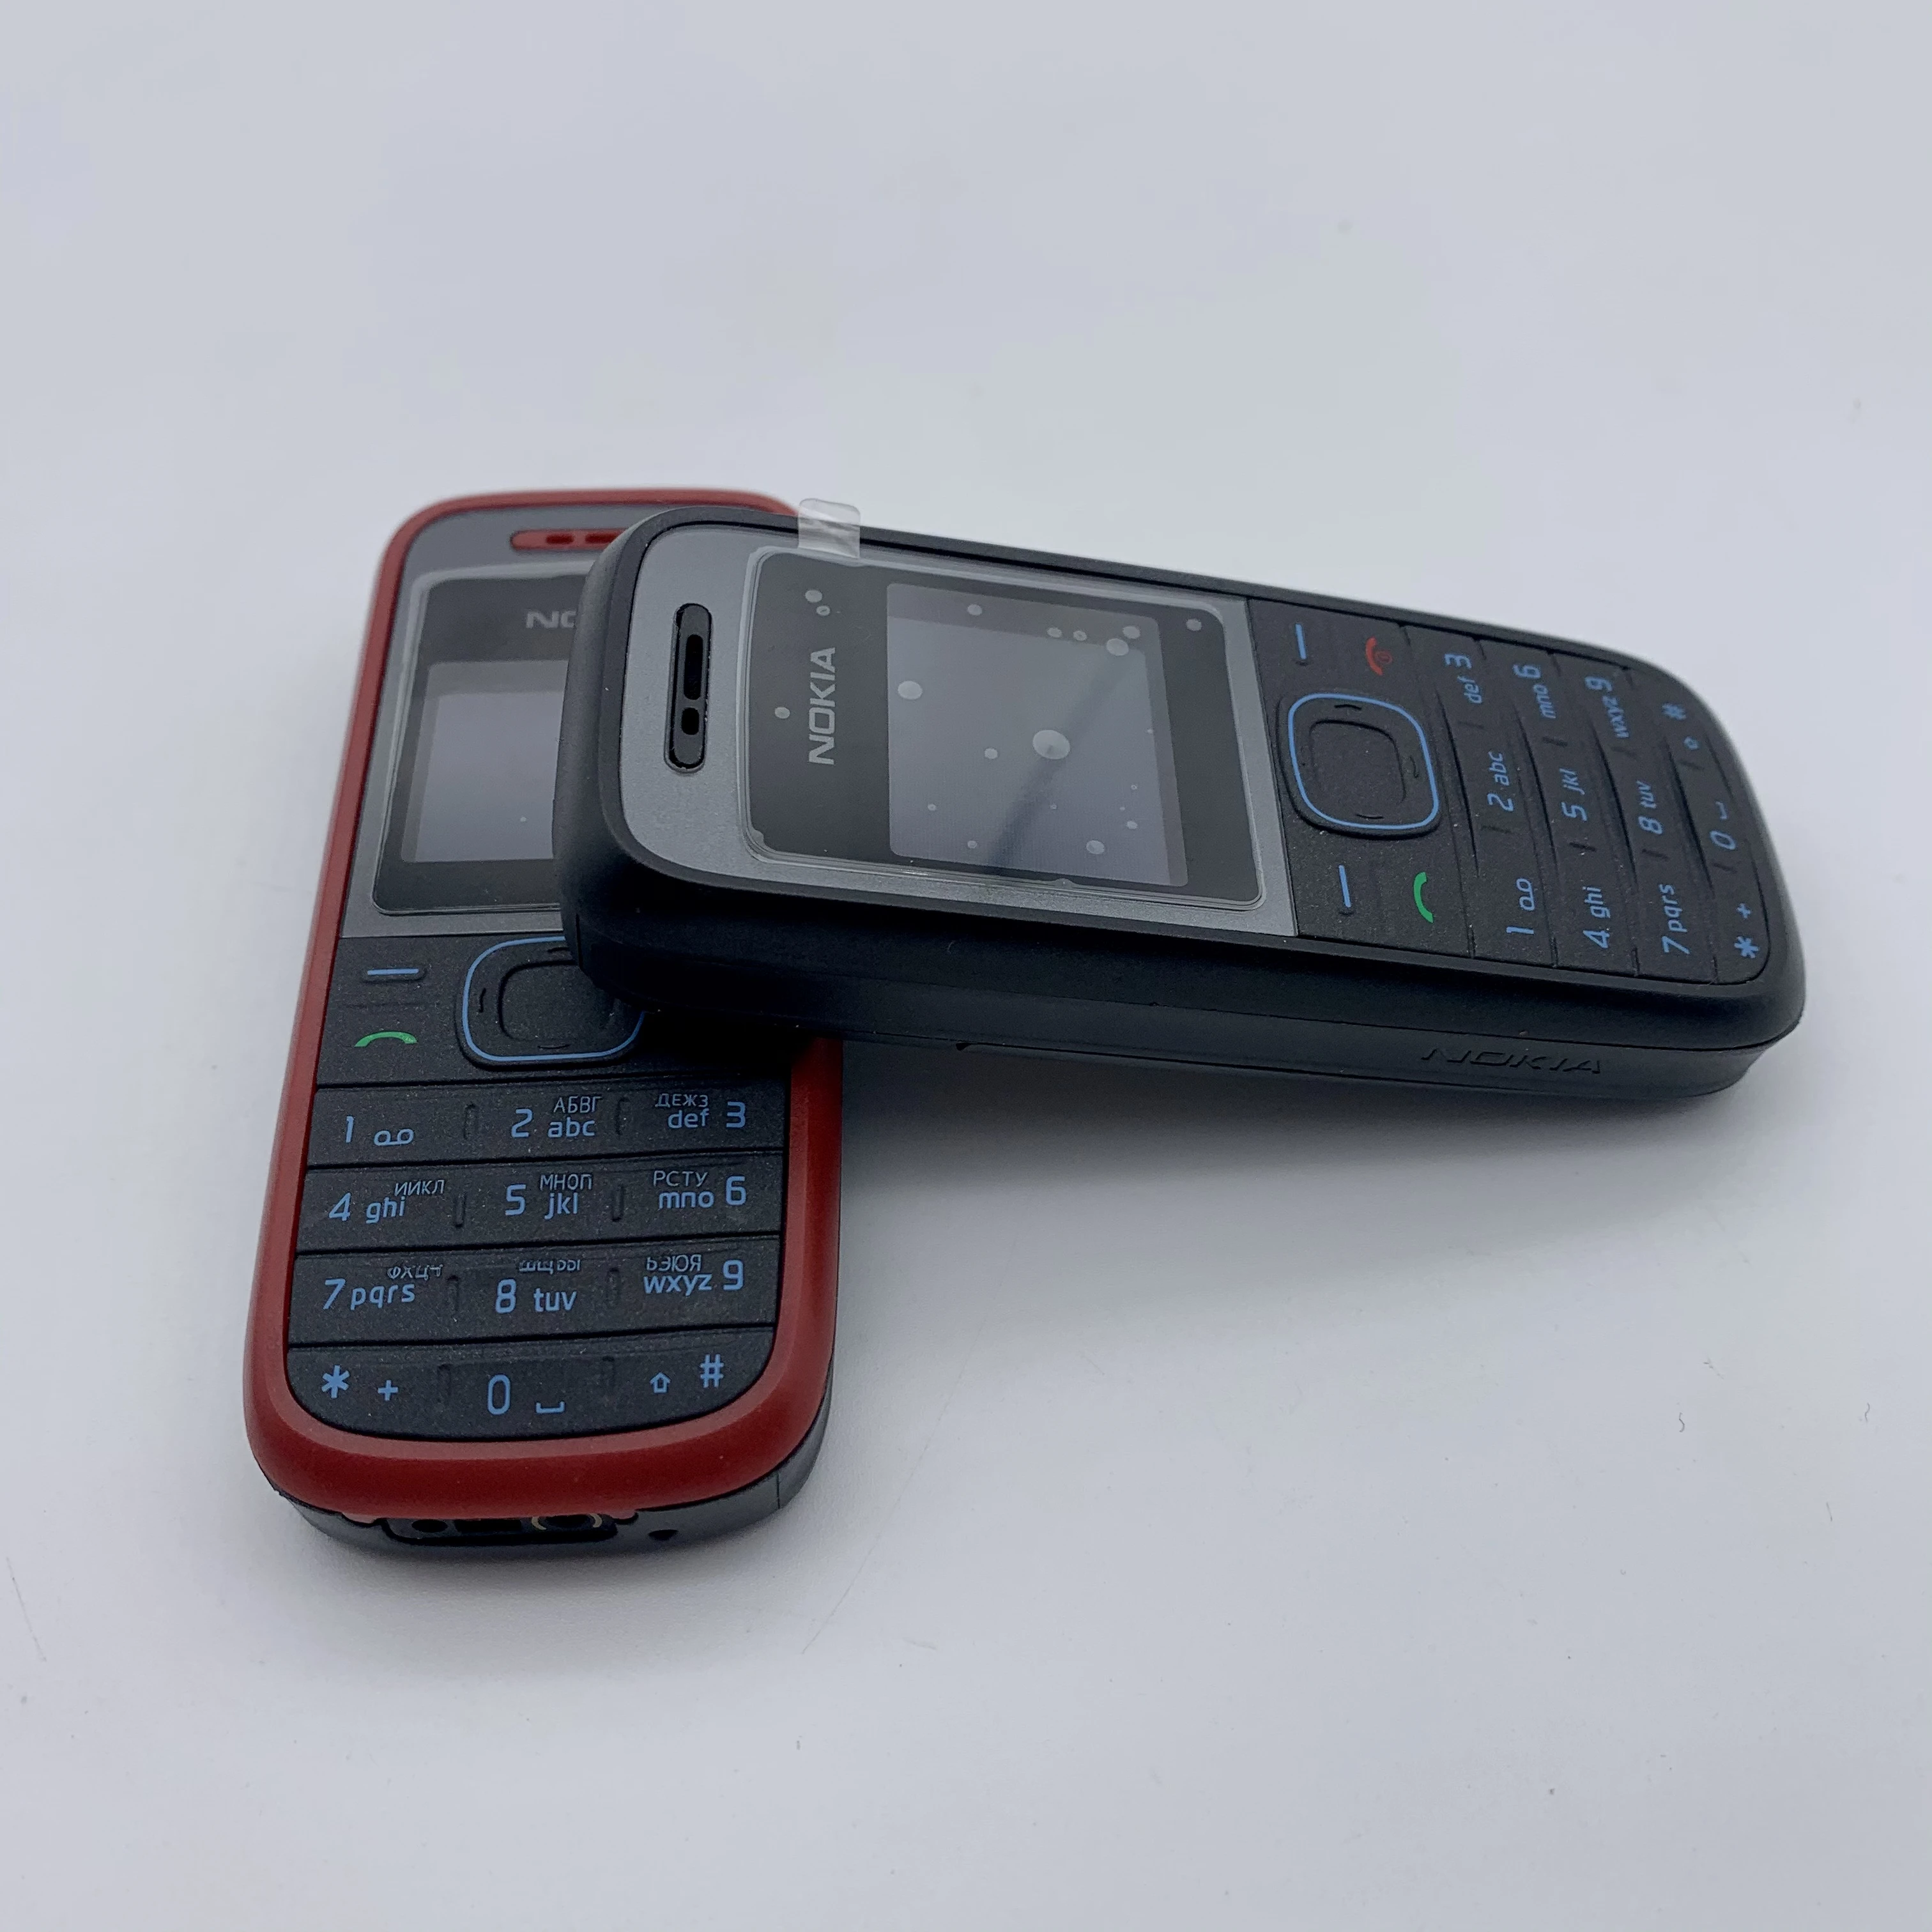 nokia 1208 refurbished original cellular nokia 1208 cheap phones gsm unlocked phone free global shipping